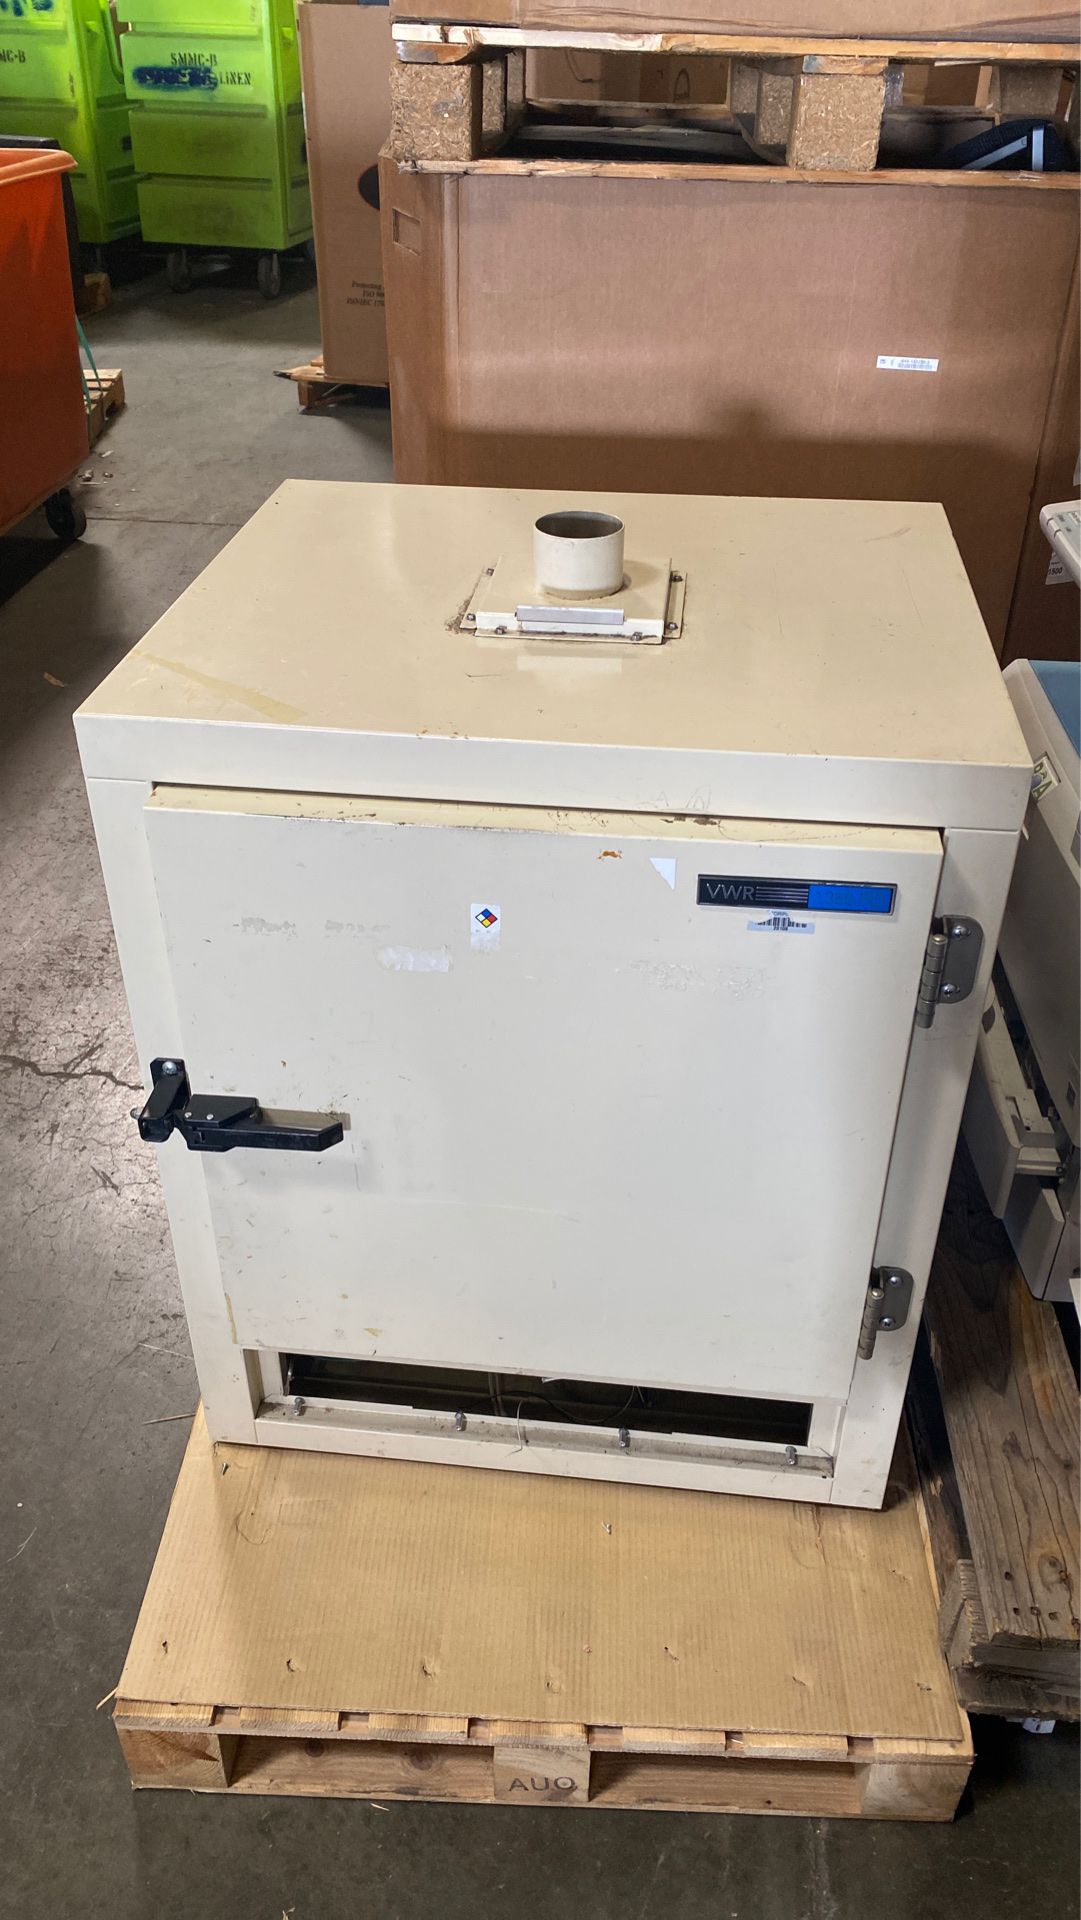 Vwr 1350 FD VWR forced air oven SCIENTIFIC INDUSTRIAL EQUIPMENT